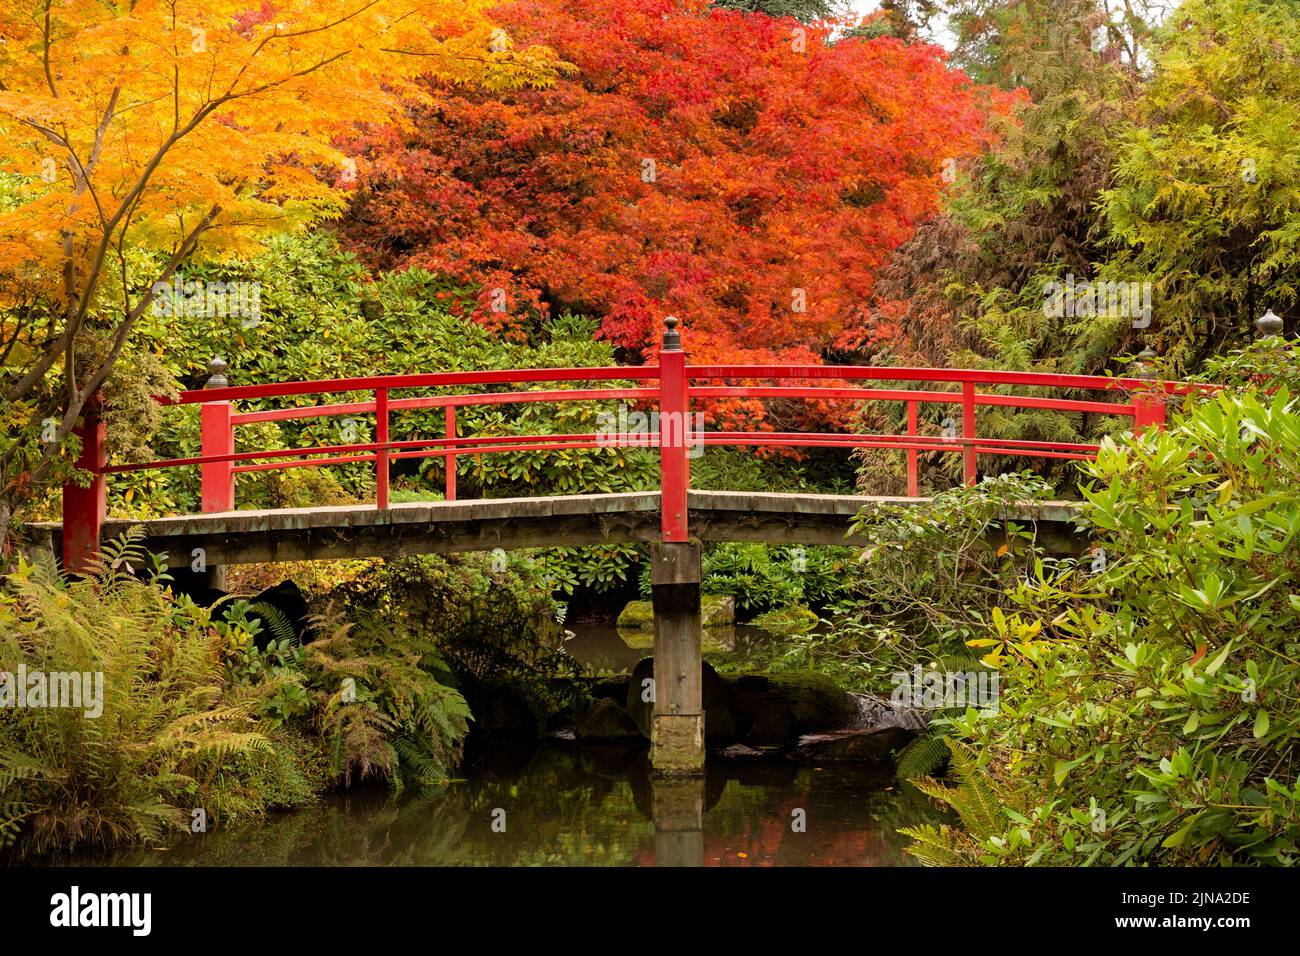 WA21860-00...WASHINGTON - Fall time view of Heart Bridge in Kubota Garden; a city of Seattle park. Stock Photo